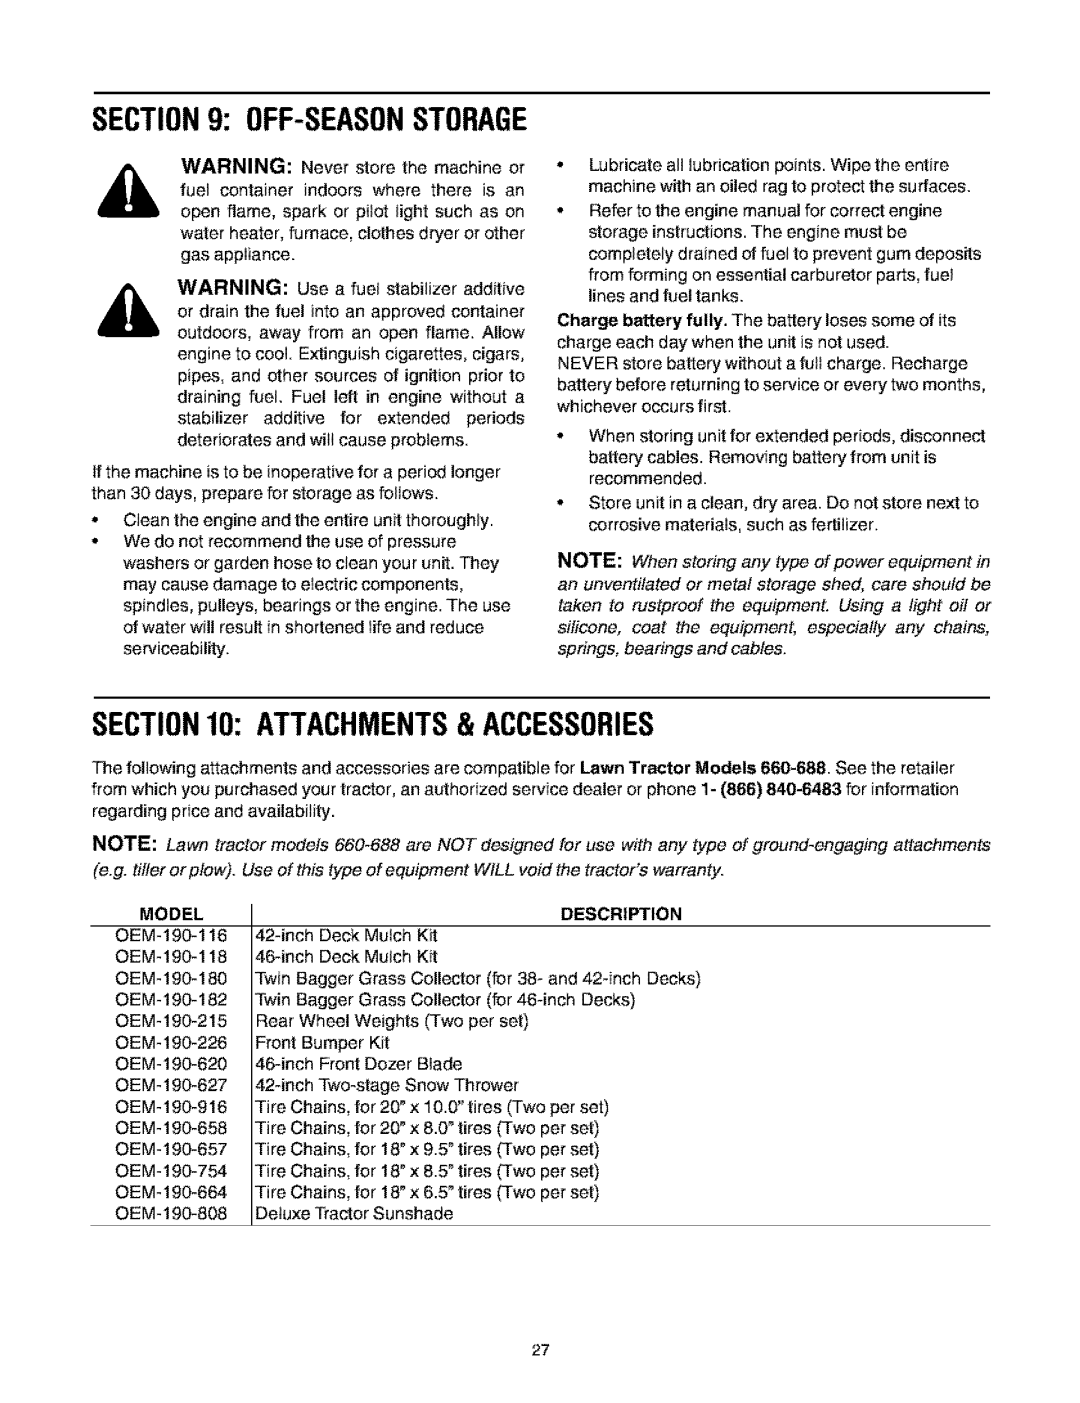 Bolens 660 manual Off-Seasonstorage, Attachments& Accessories, Model, Description 